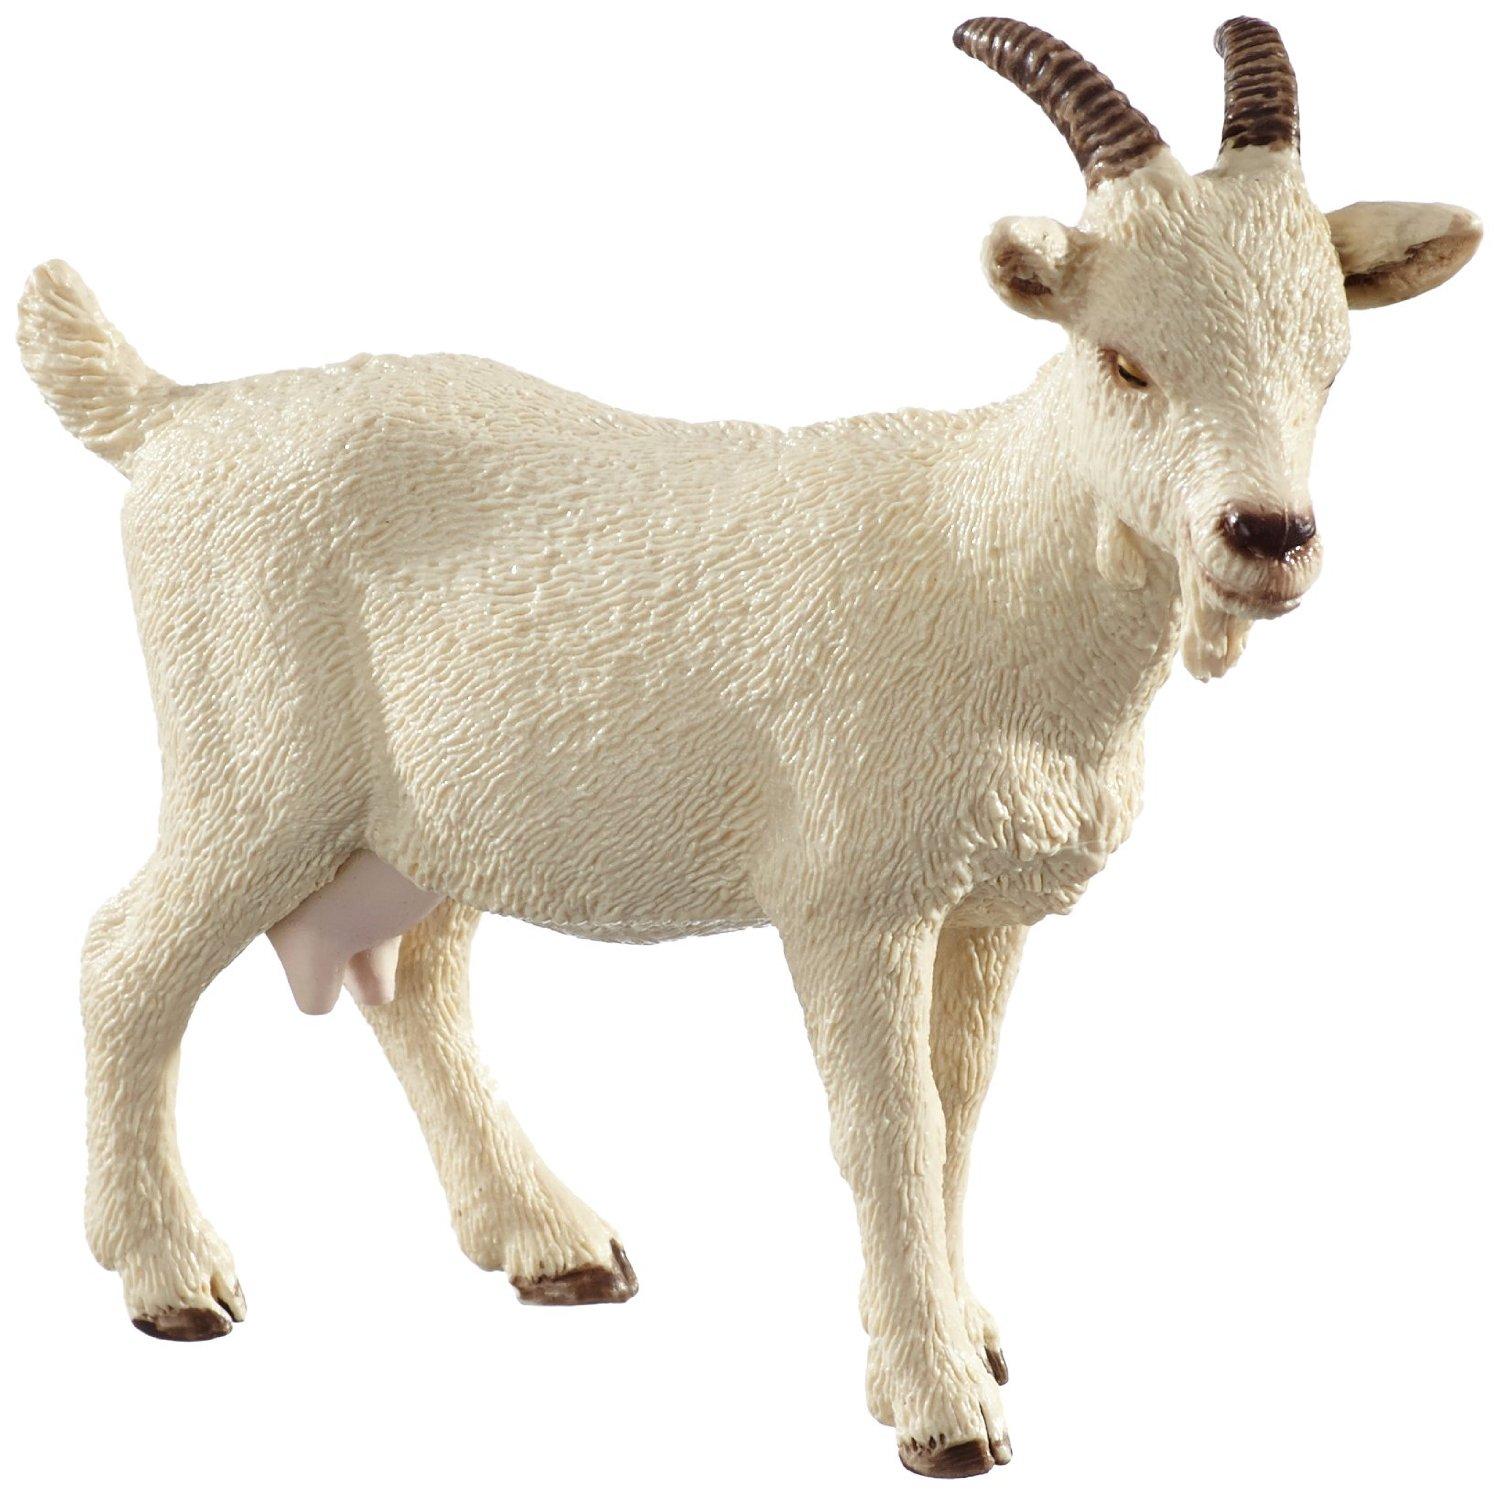 Amazon.com: Schleich Domestic Goat Toy Figure: Toys & Games